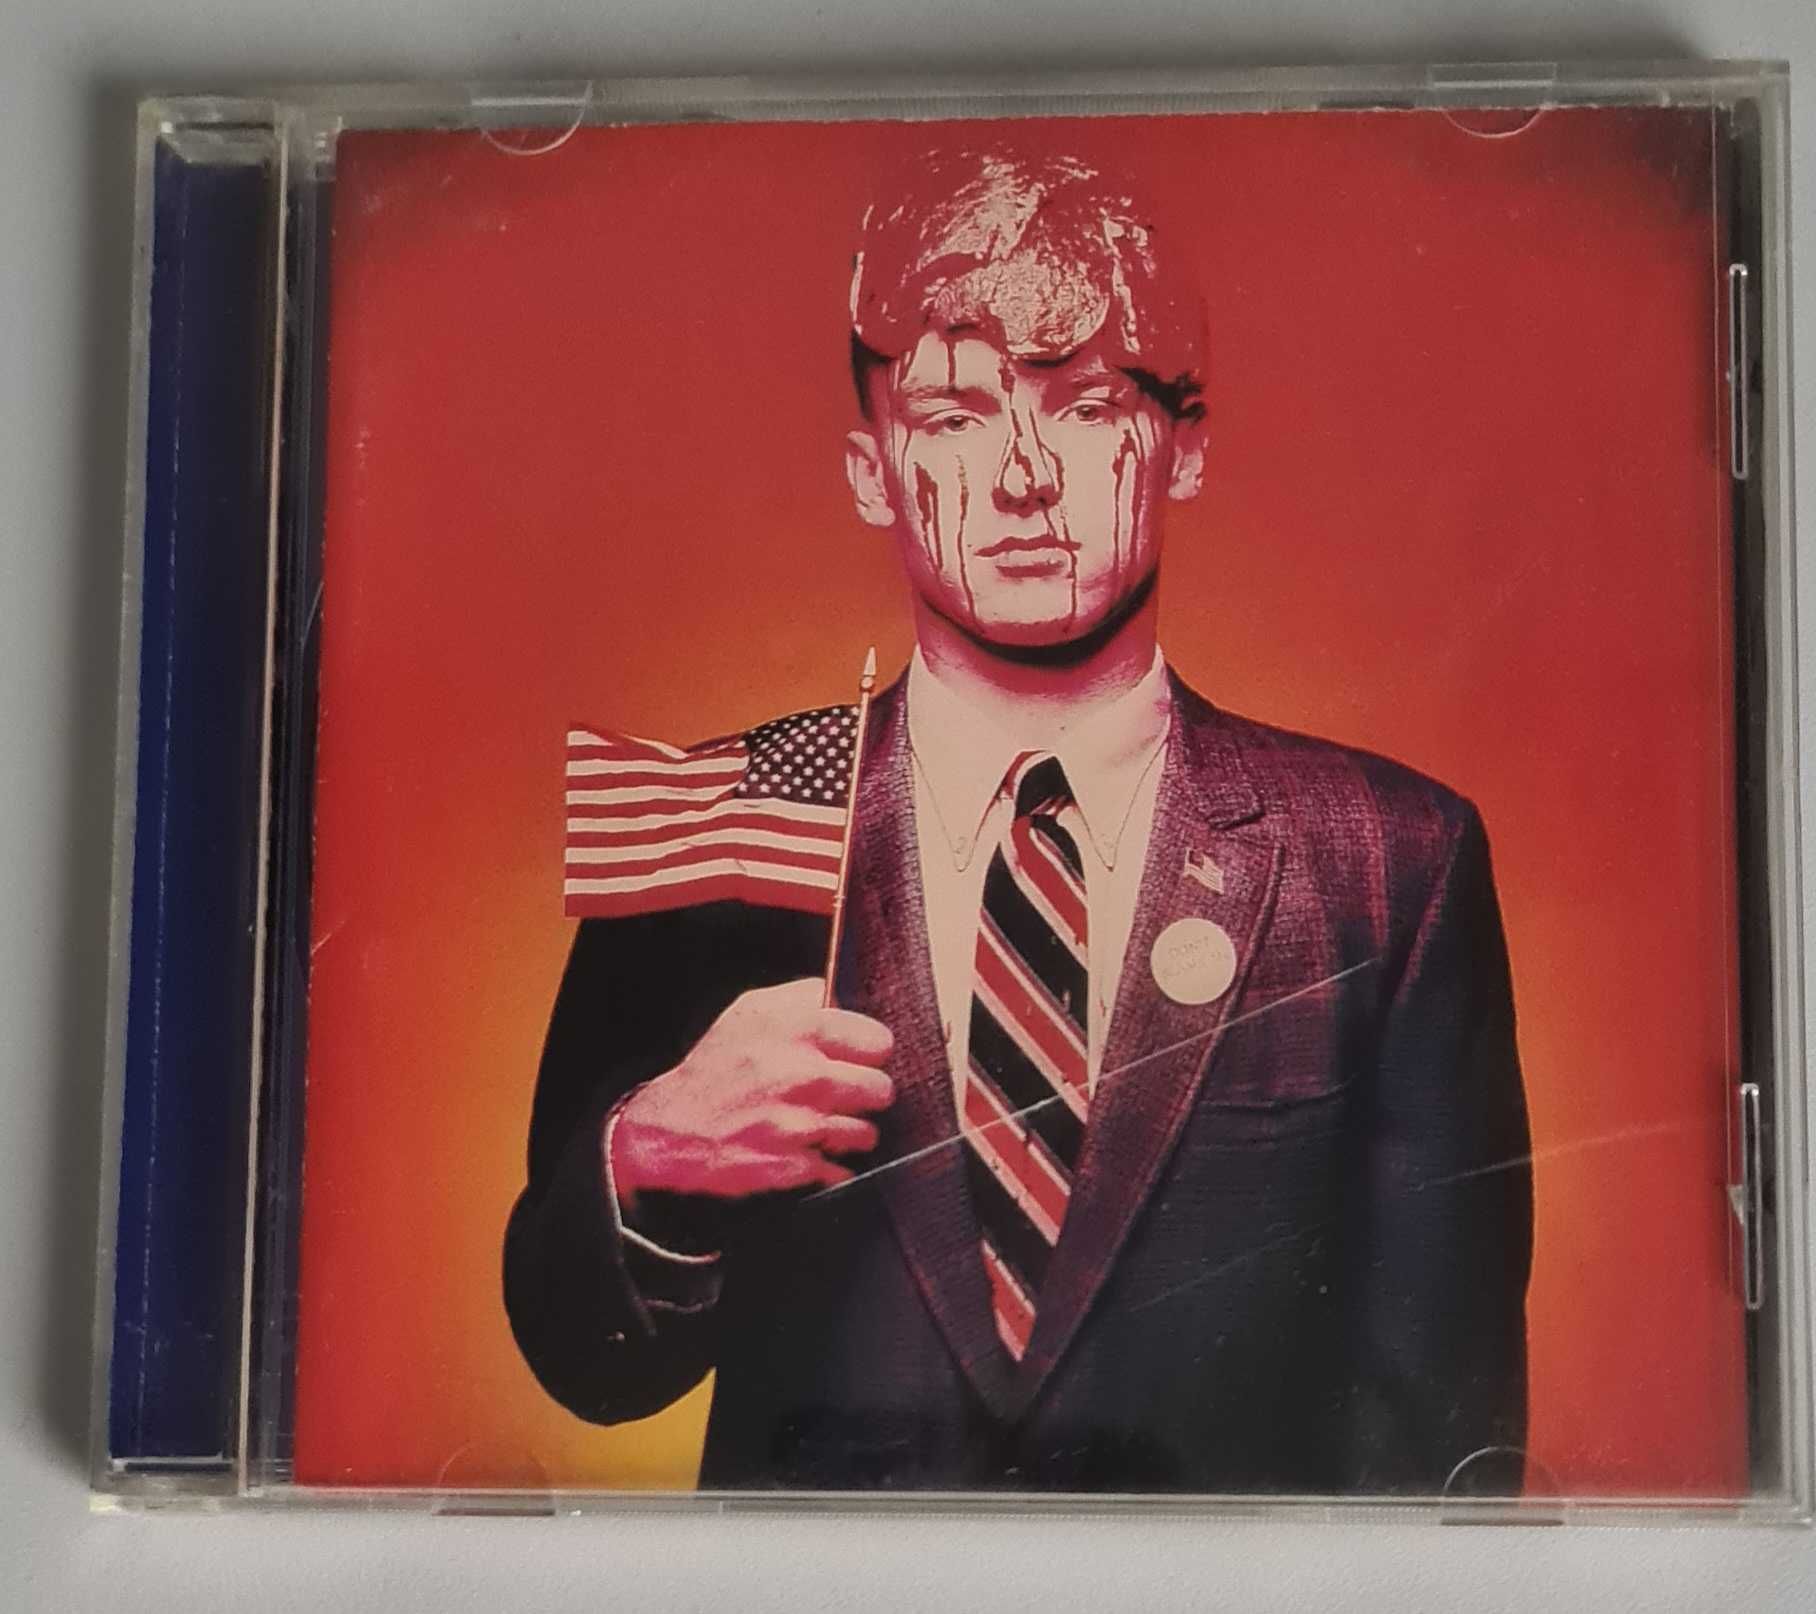 Ministry / Filth Pig Warner Bros cd 1996